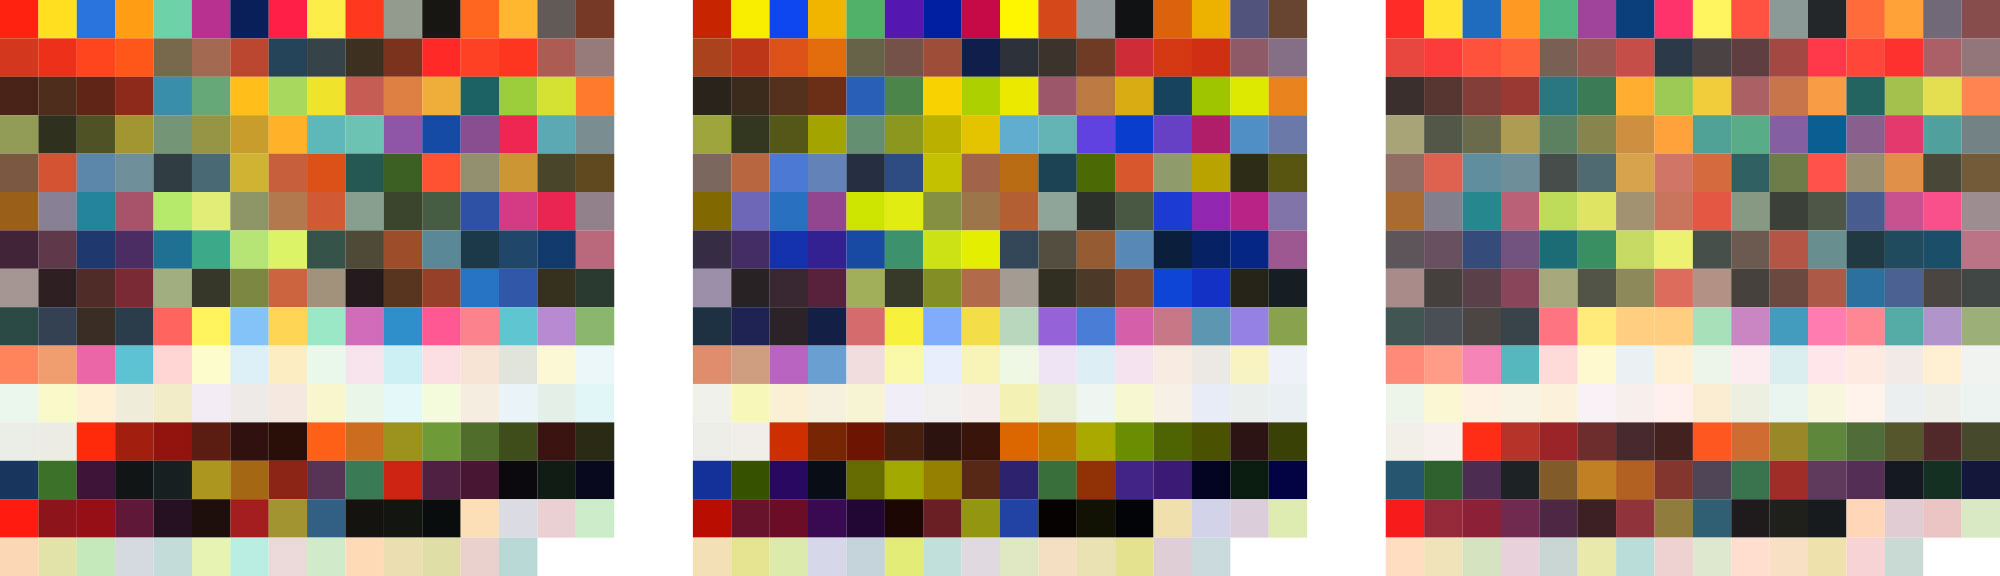 Sampled colors